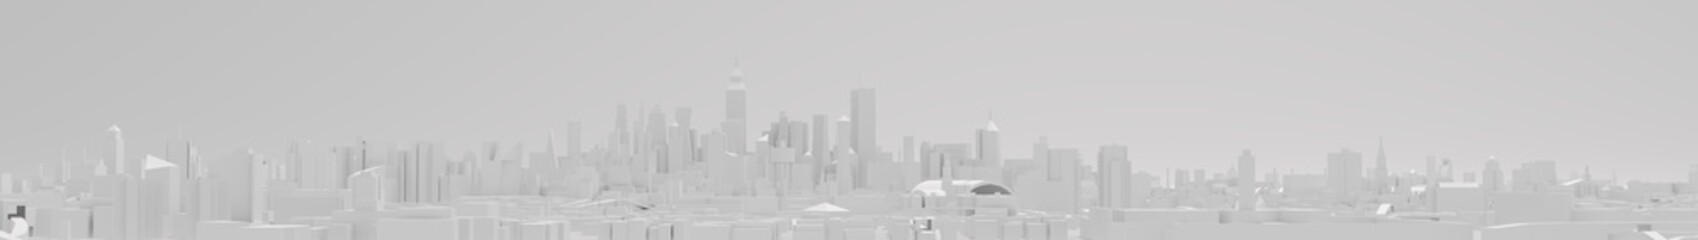 City Center 3d rendering, illustration 3d